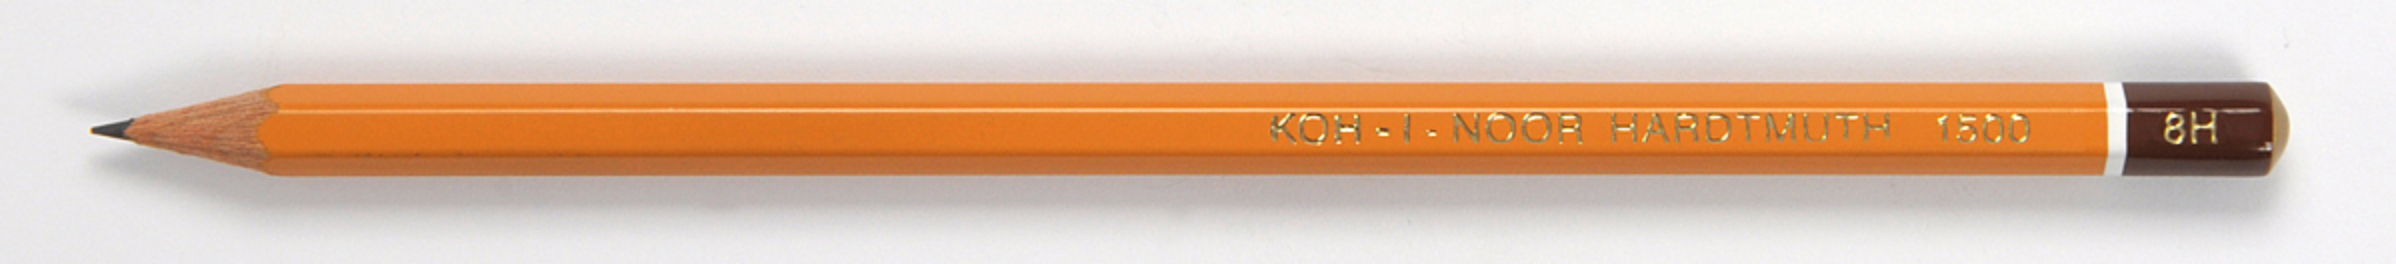 Professional Graphite Pencils